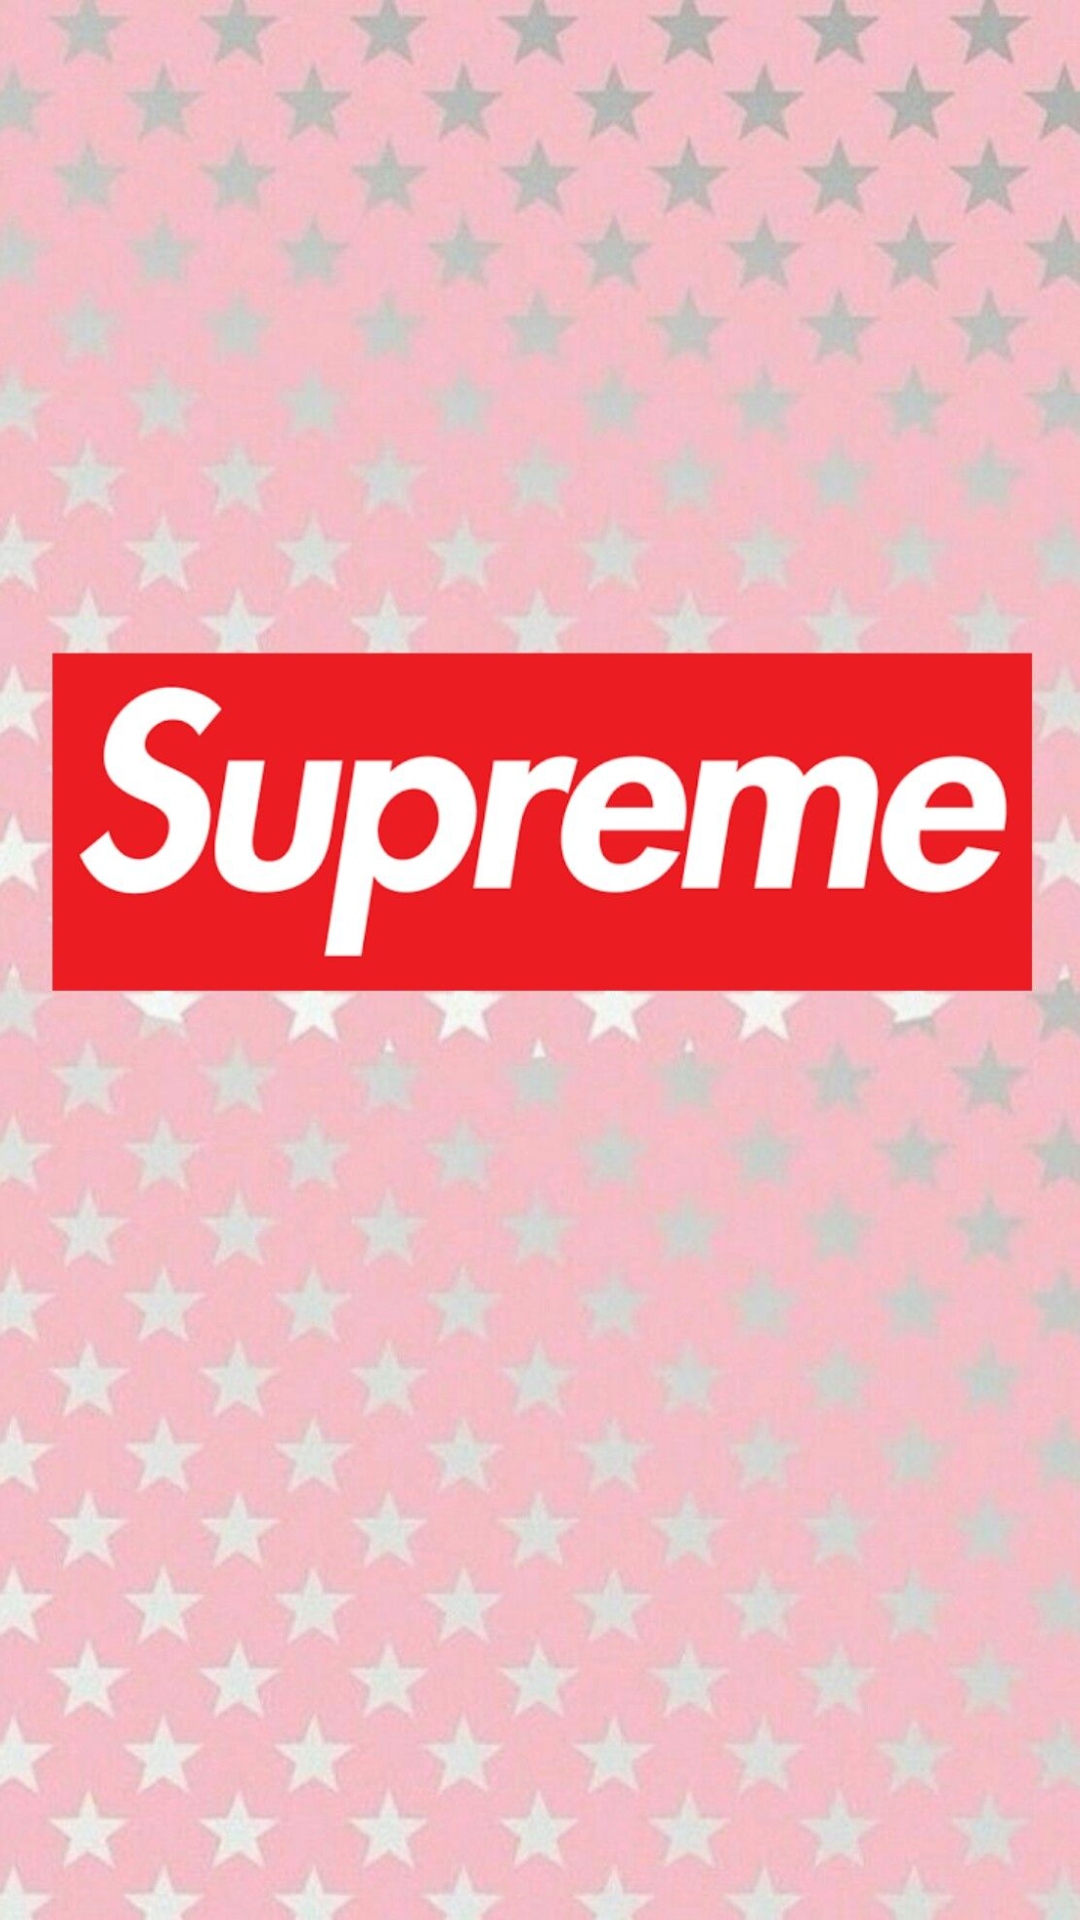 Supreme Logo Pictures